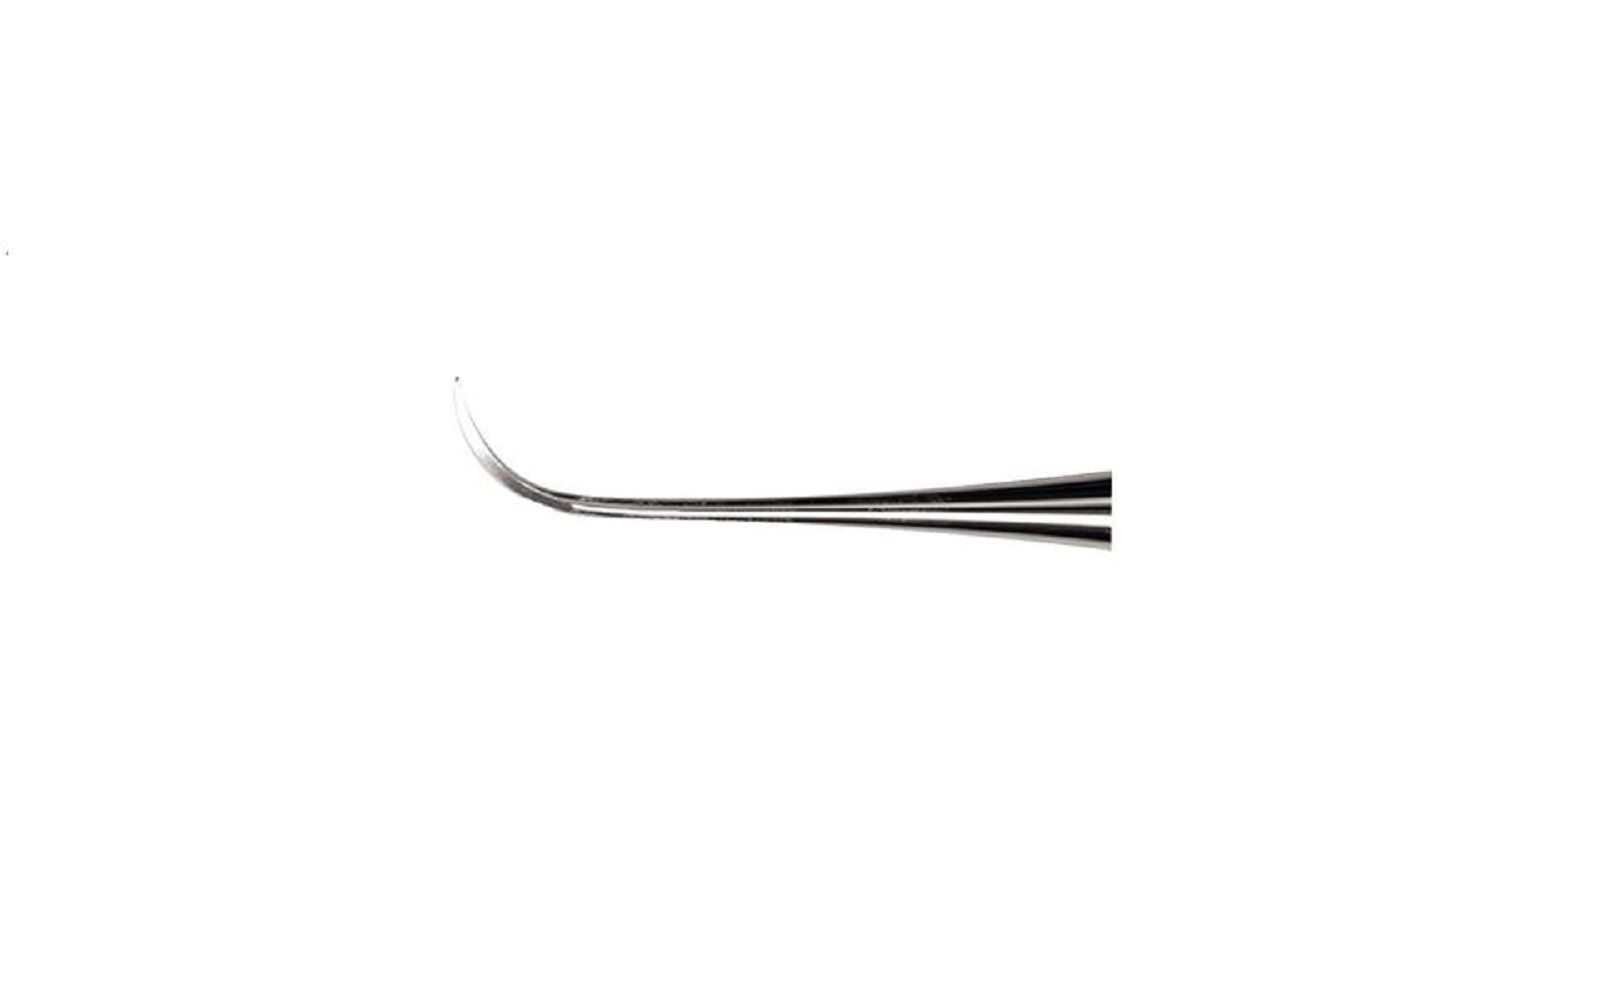 Titanium implant instruments – nebraska #128/langer #5, double end